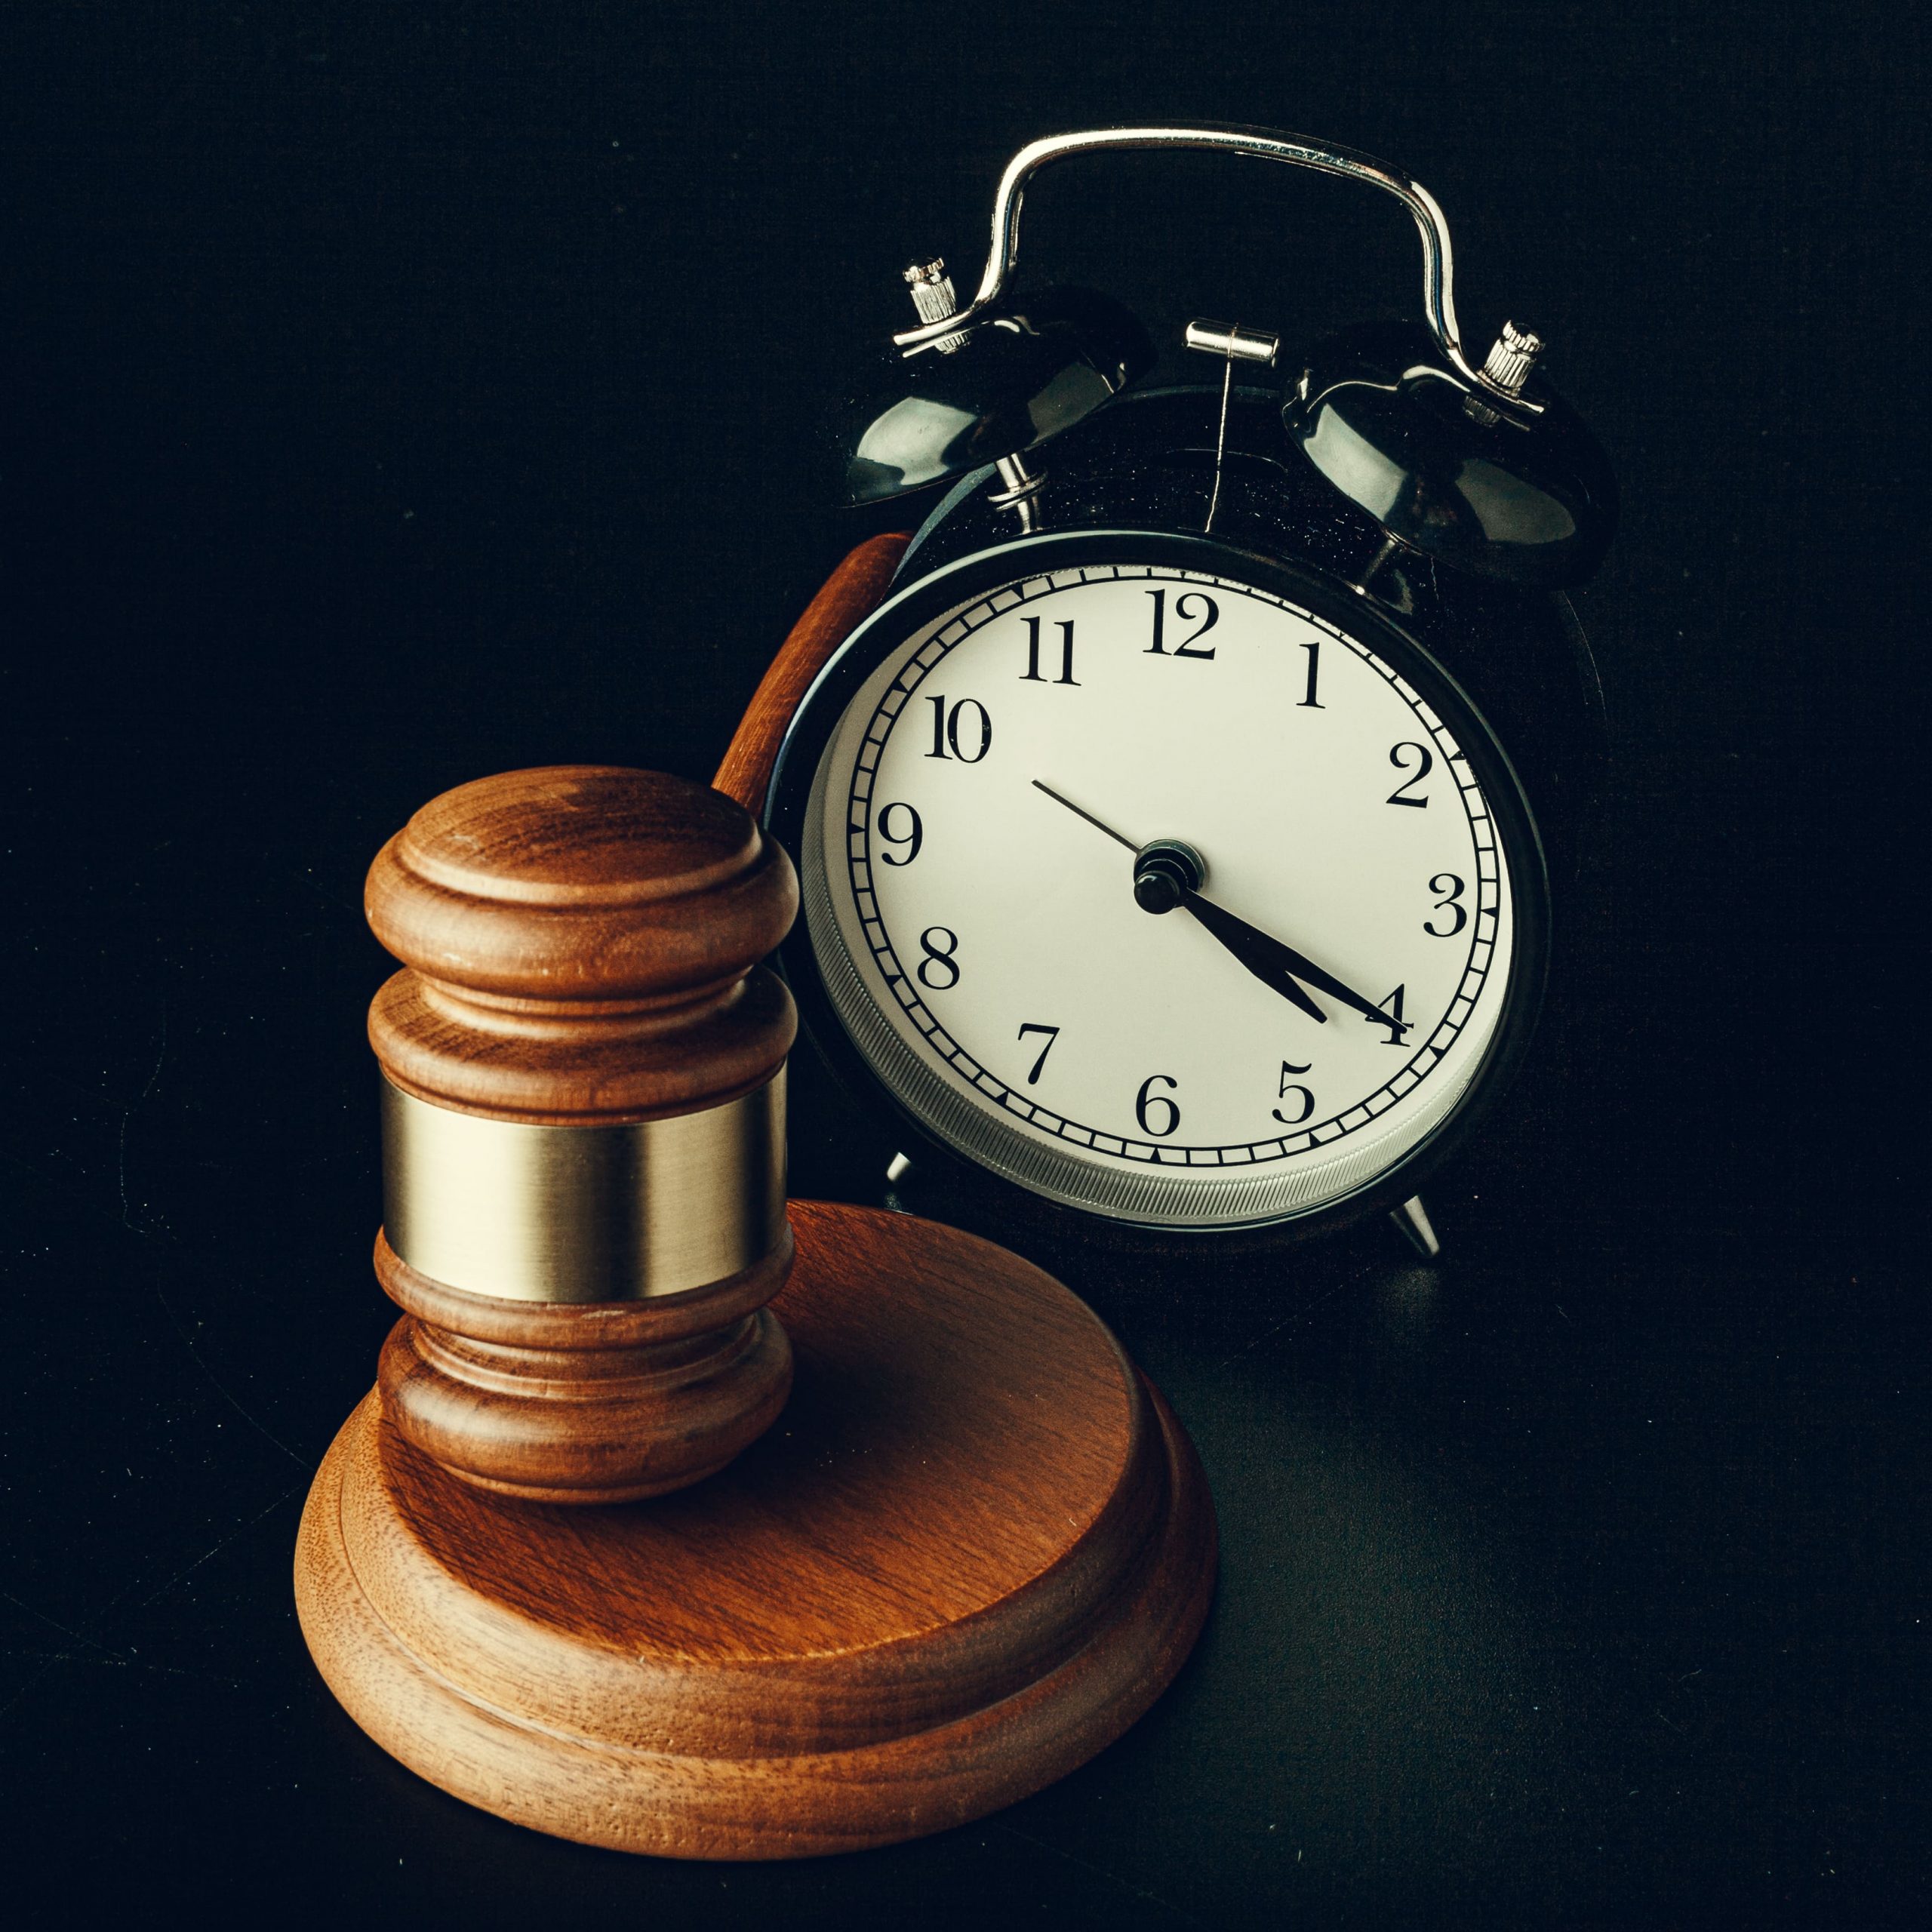 wooden-judge-hammer-with-alarm-clock-on-black-back-2021-09-02-23-12-36-utc (2)